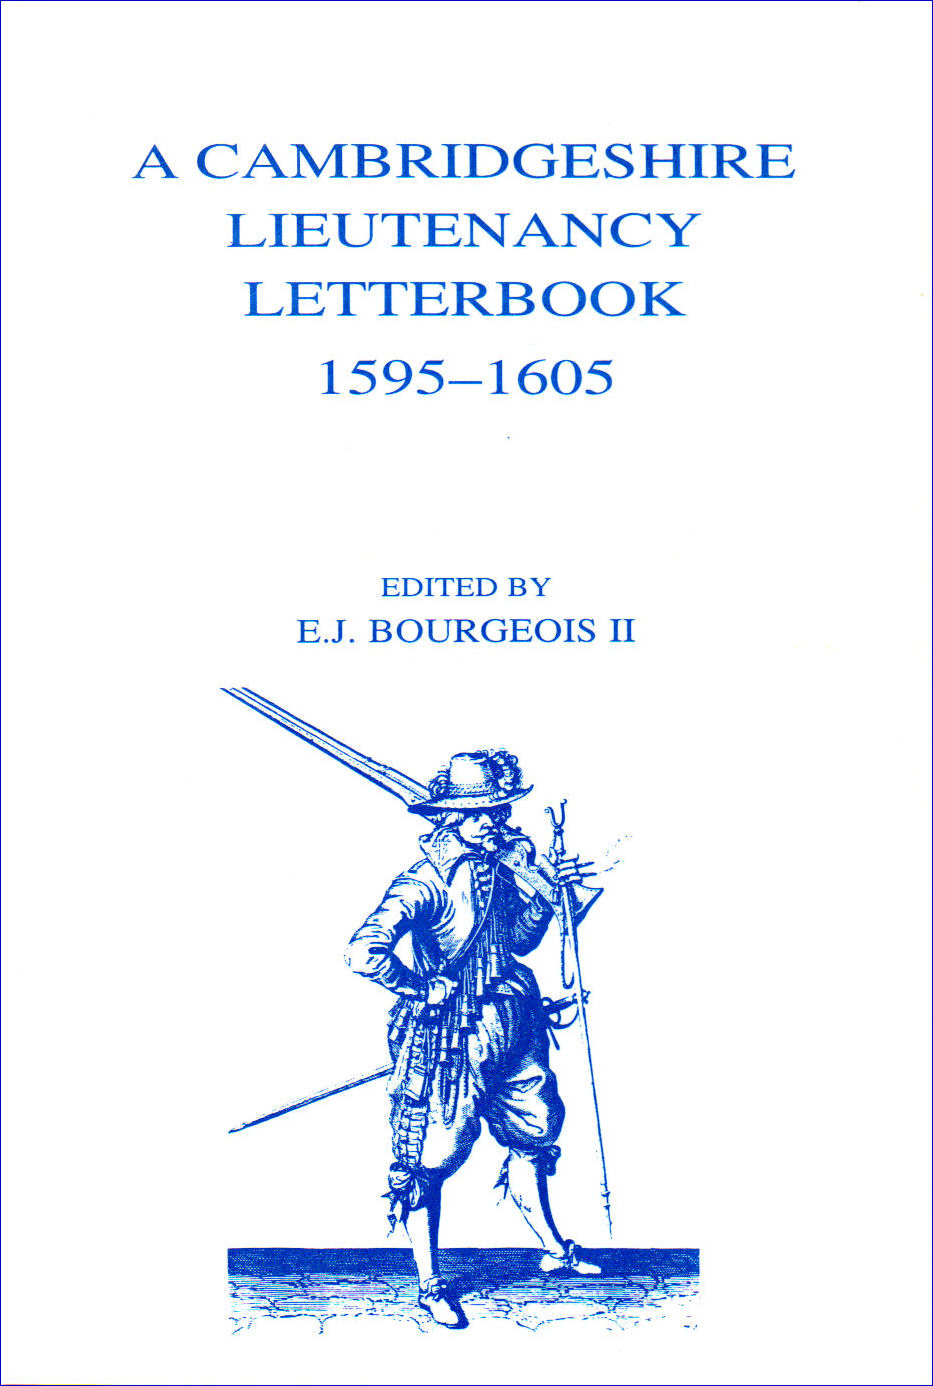 12. A Cambridgeshire Lieutenancy Letterbook 1595-1605. Edited by E.J. Bourgeois II